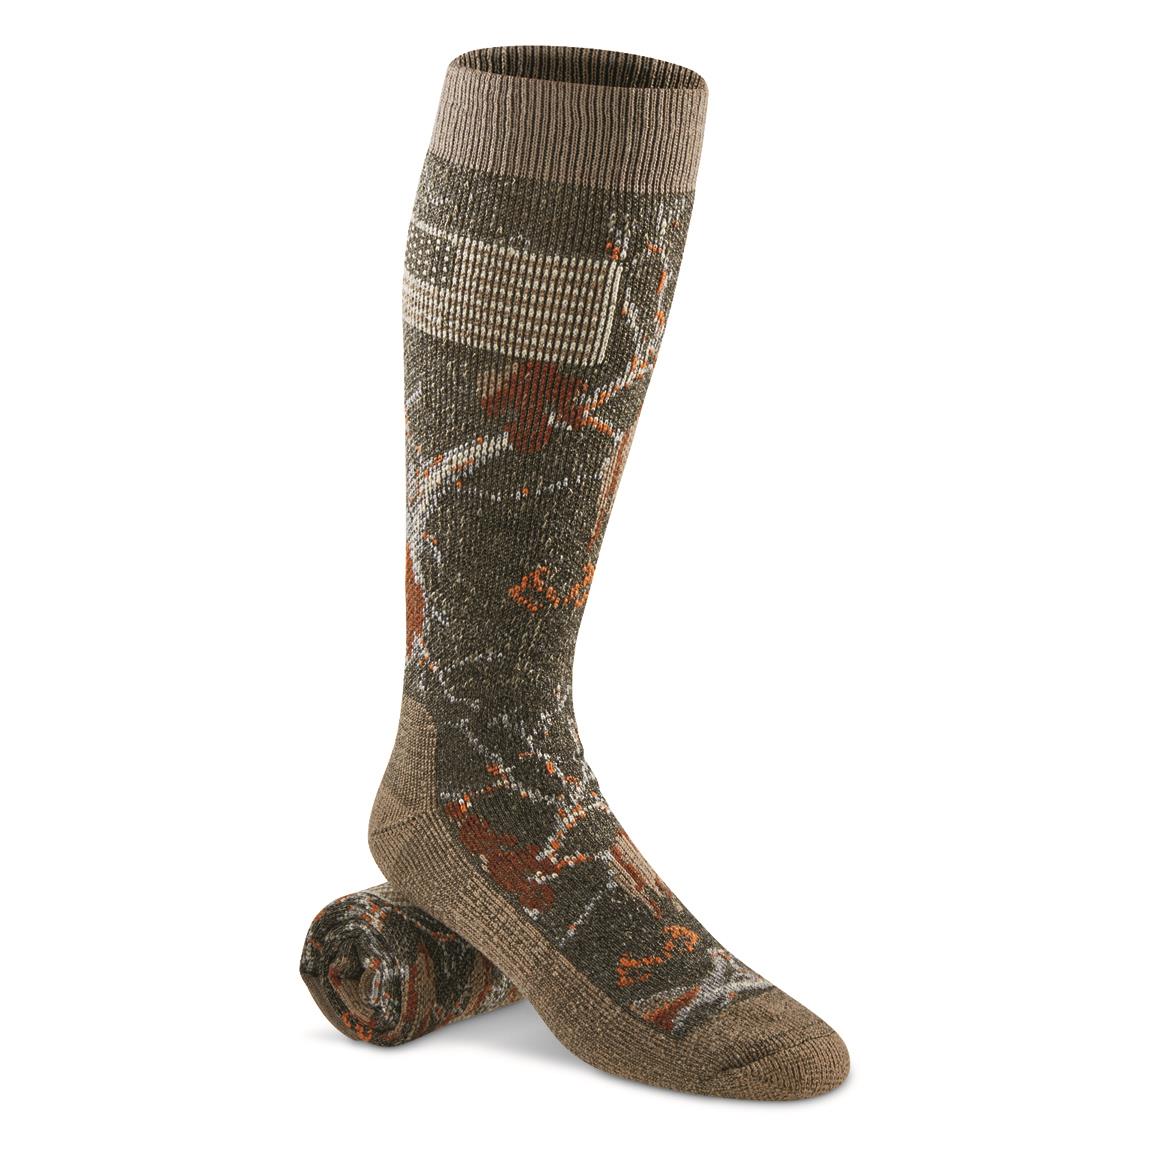 Realtree Men's Ameri-camo Merino Wool Blend Boot Socks, Mocha Camo